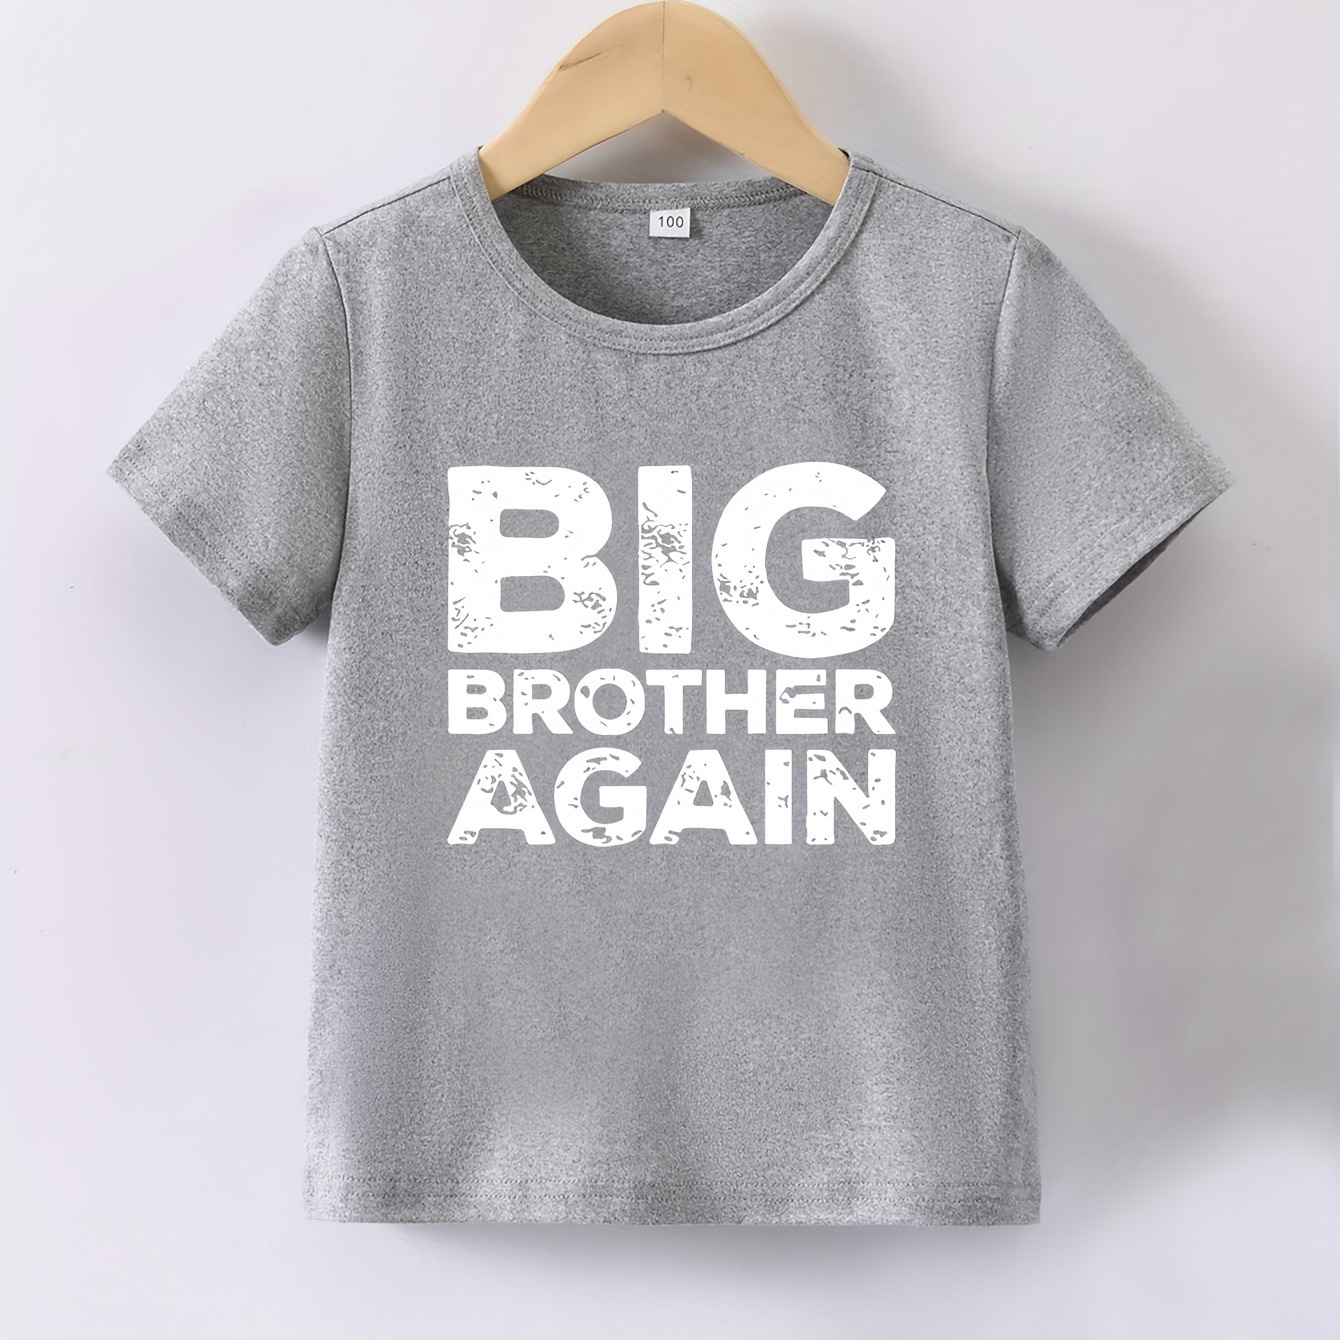 

Big Brother Again Print, Boys Creative T-shirt, Comfy Crew Neck Casual Tee Top, Trendy Summer Top